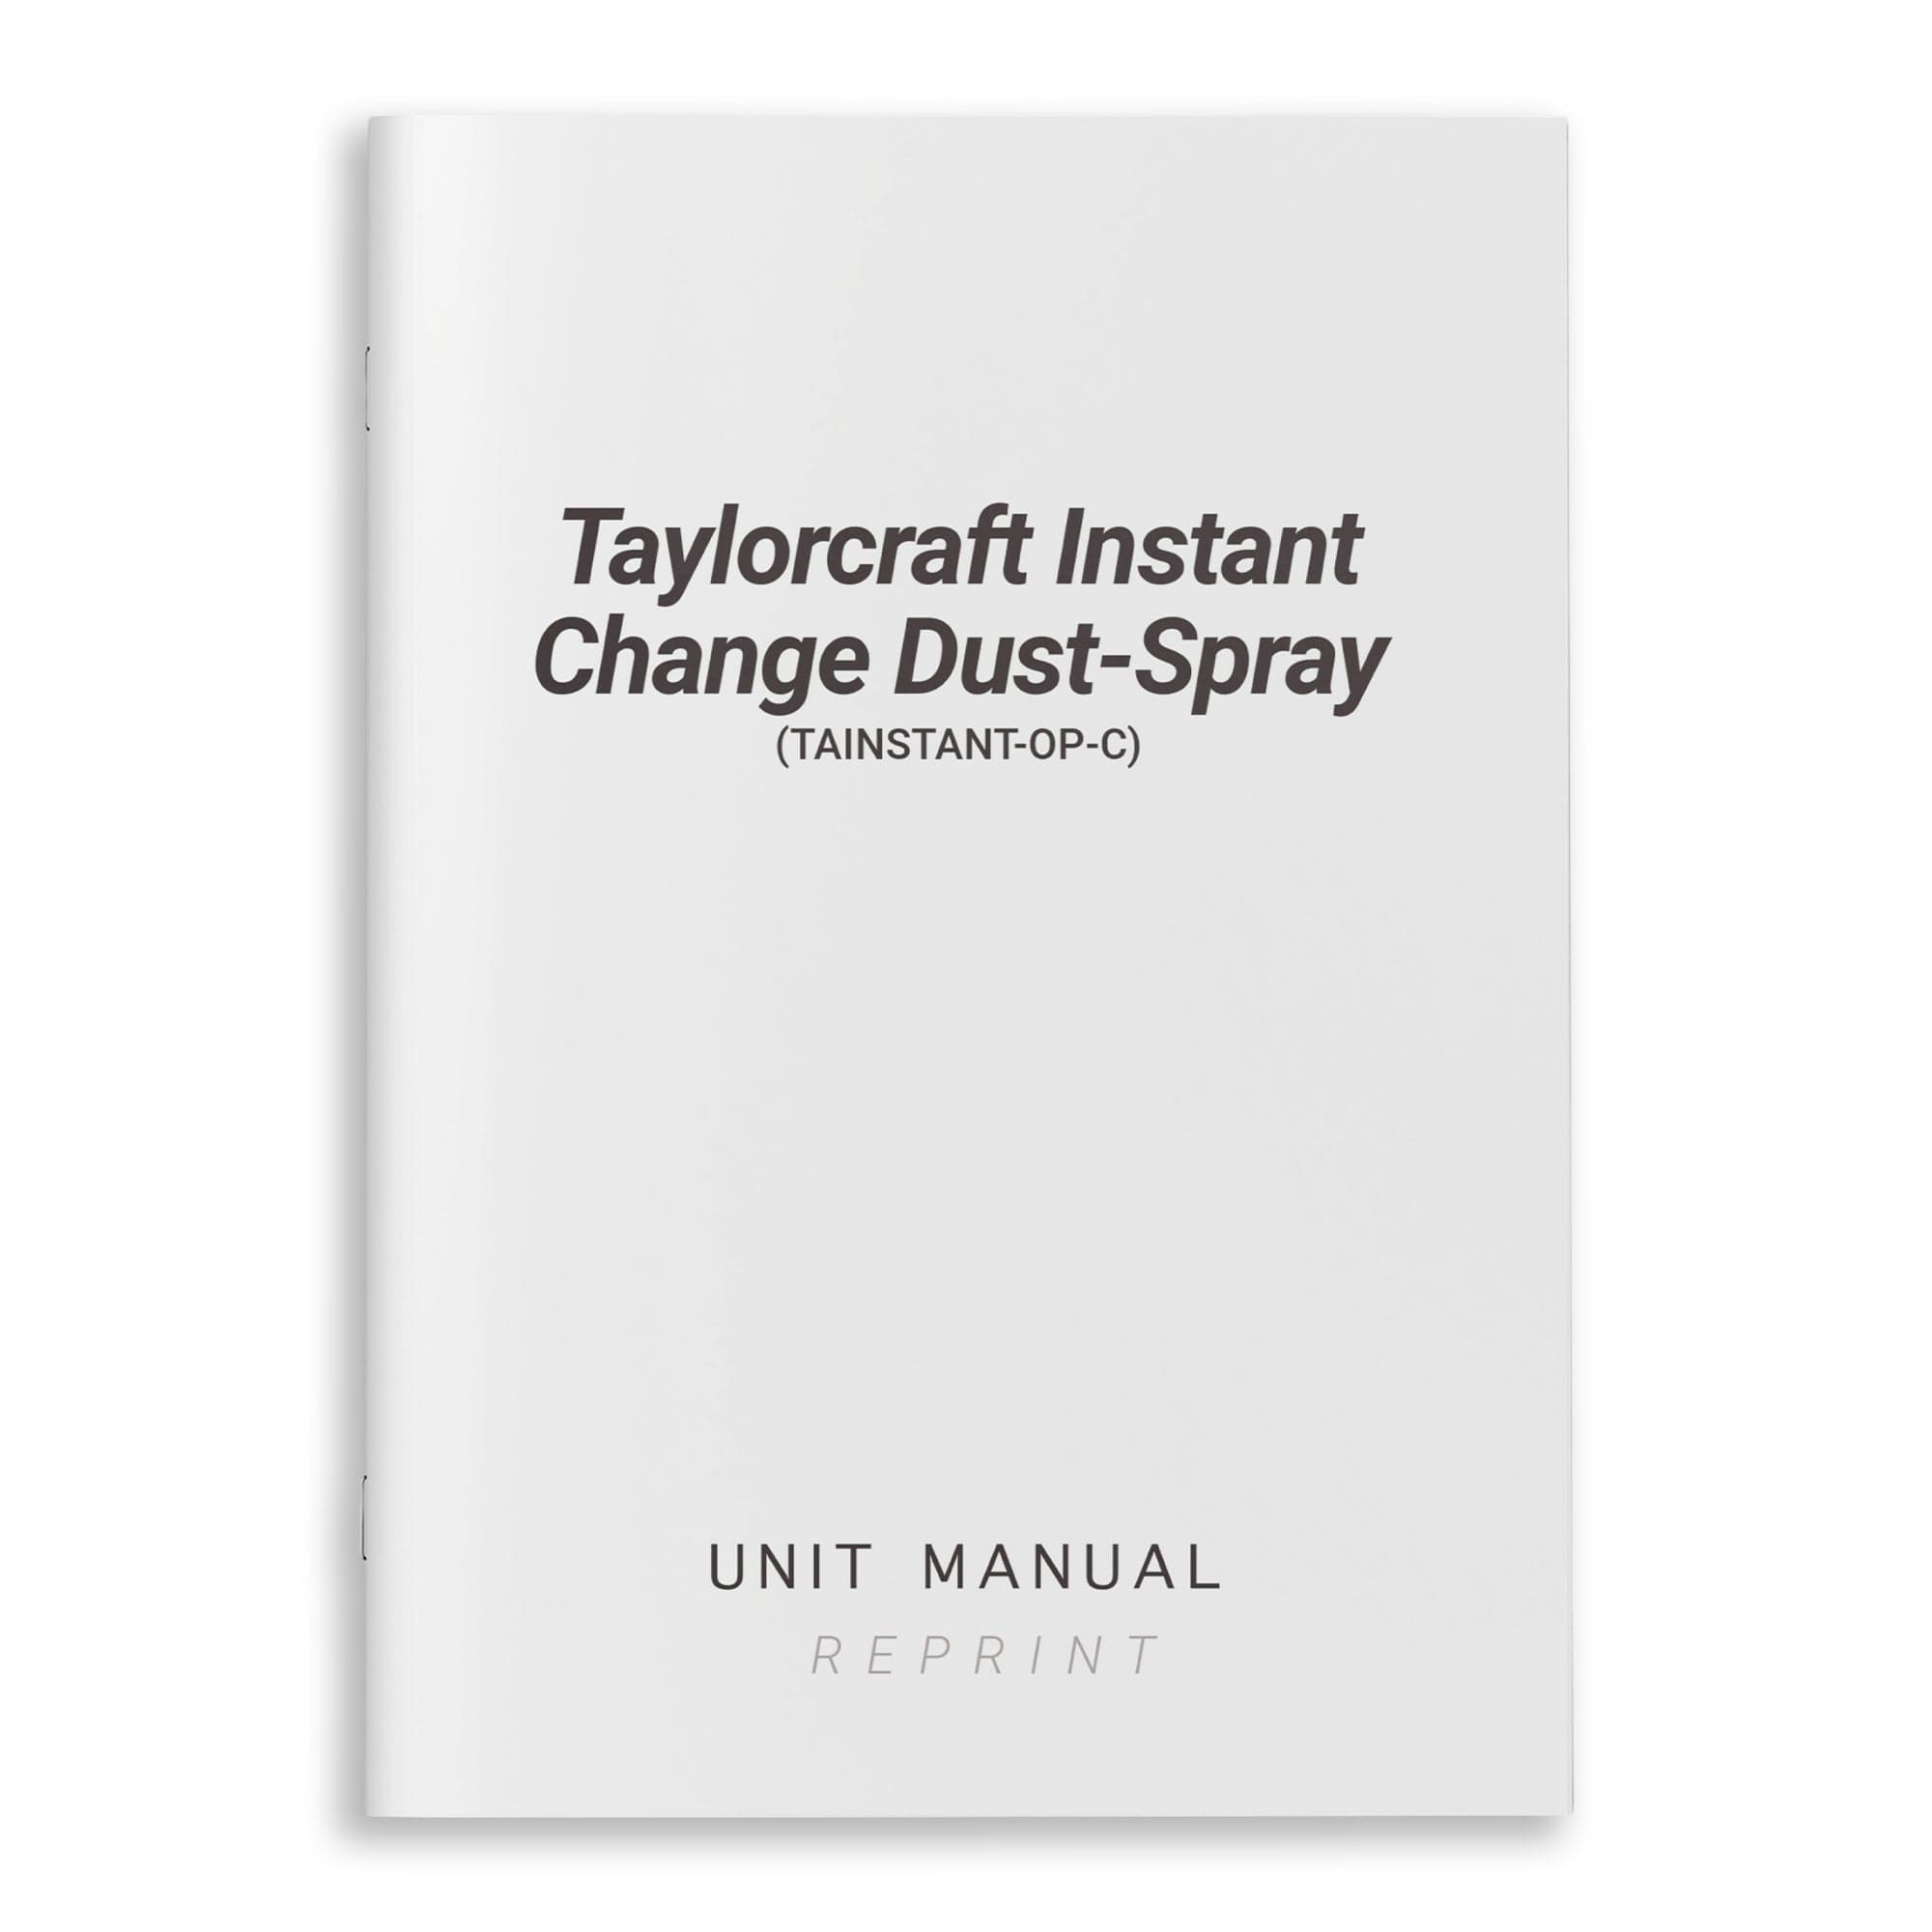 Taylorcraft Instant Change Dust-Spray Unit Manual (TAINSTANT-OP-C)